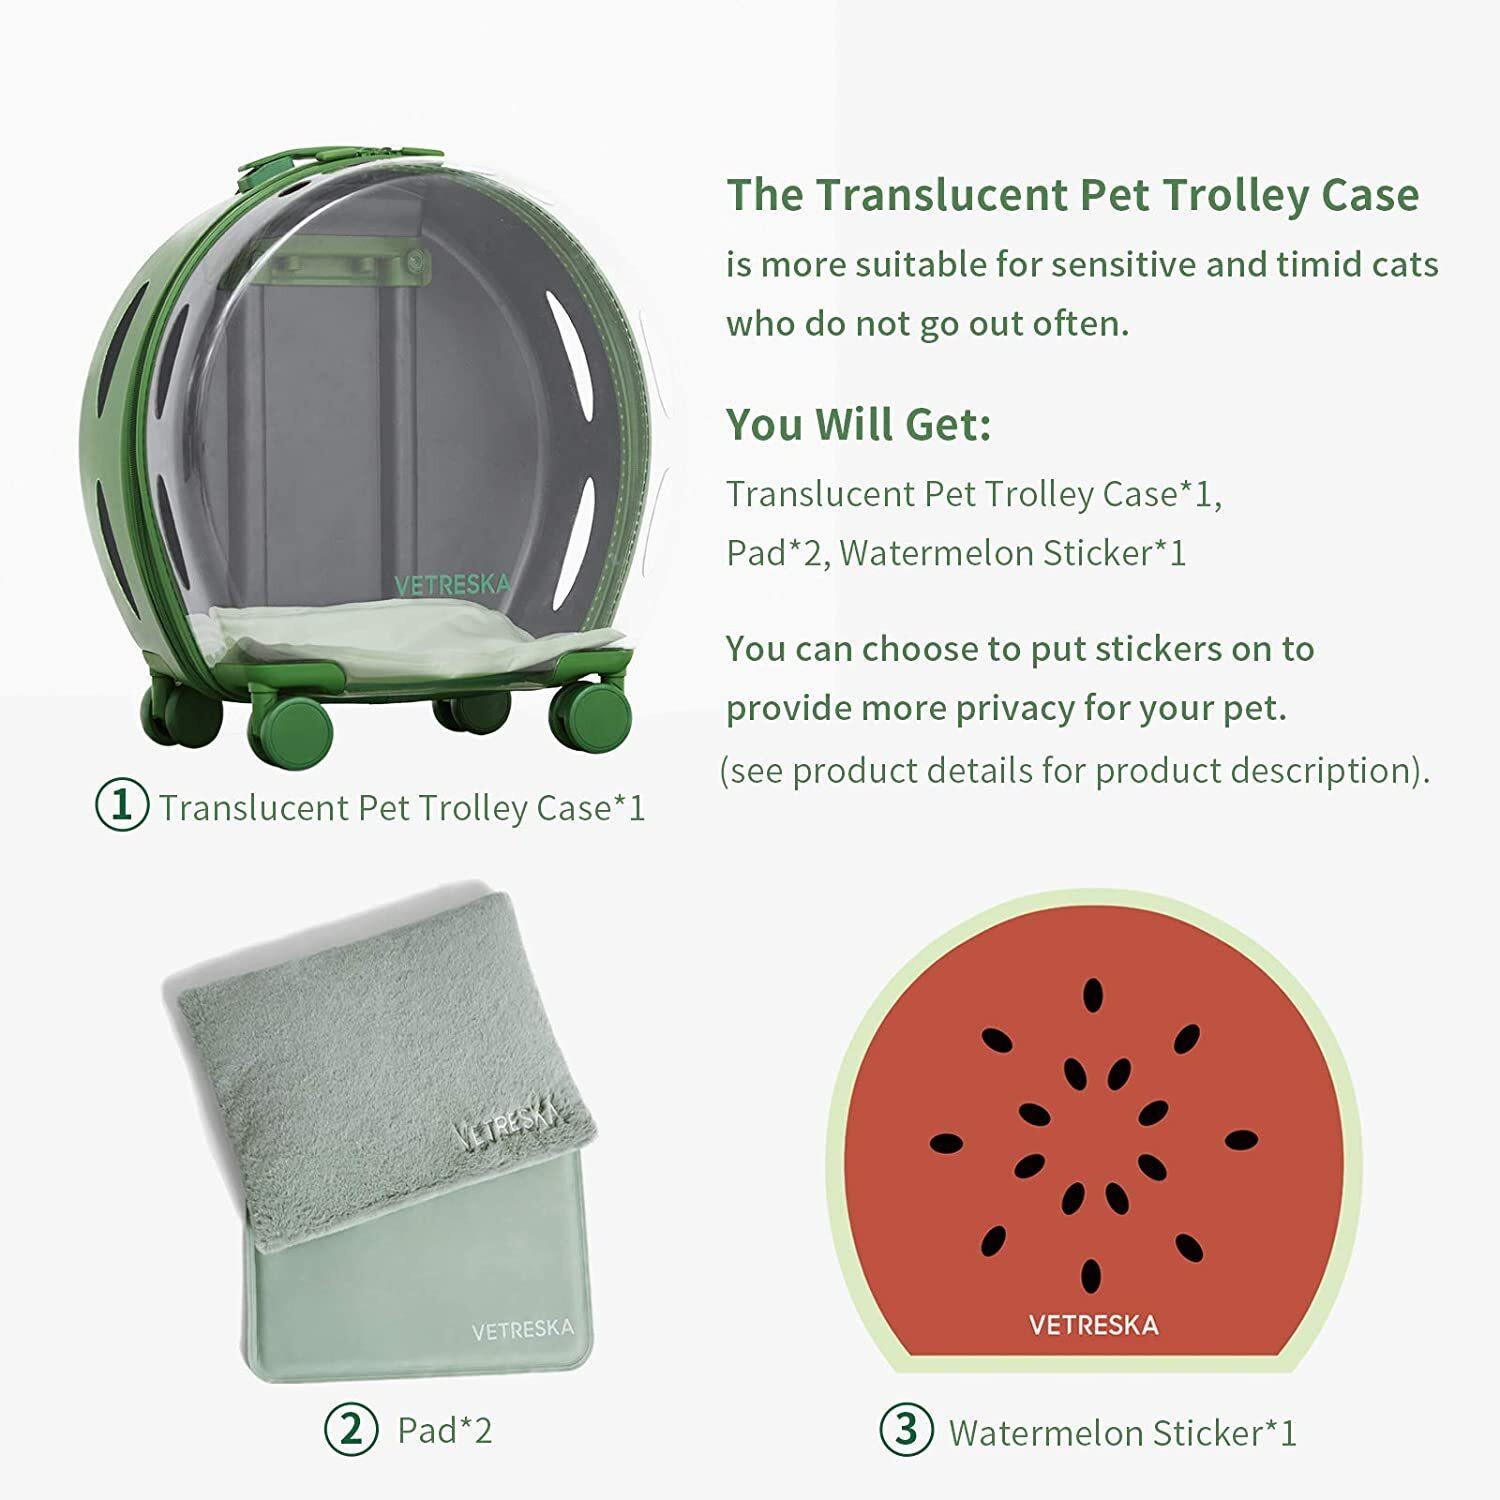 Vetreska Bubble Pet Carrier Green & Transparent